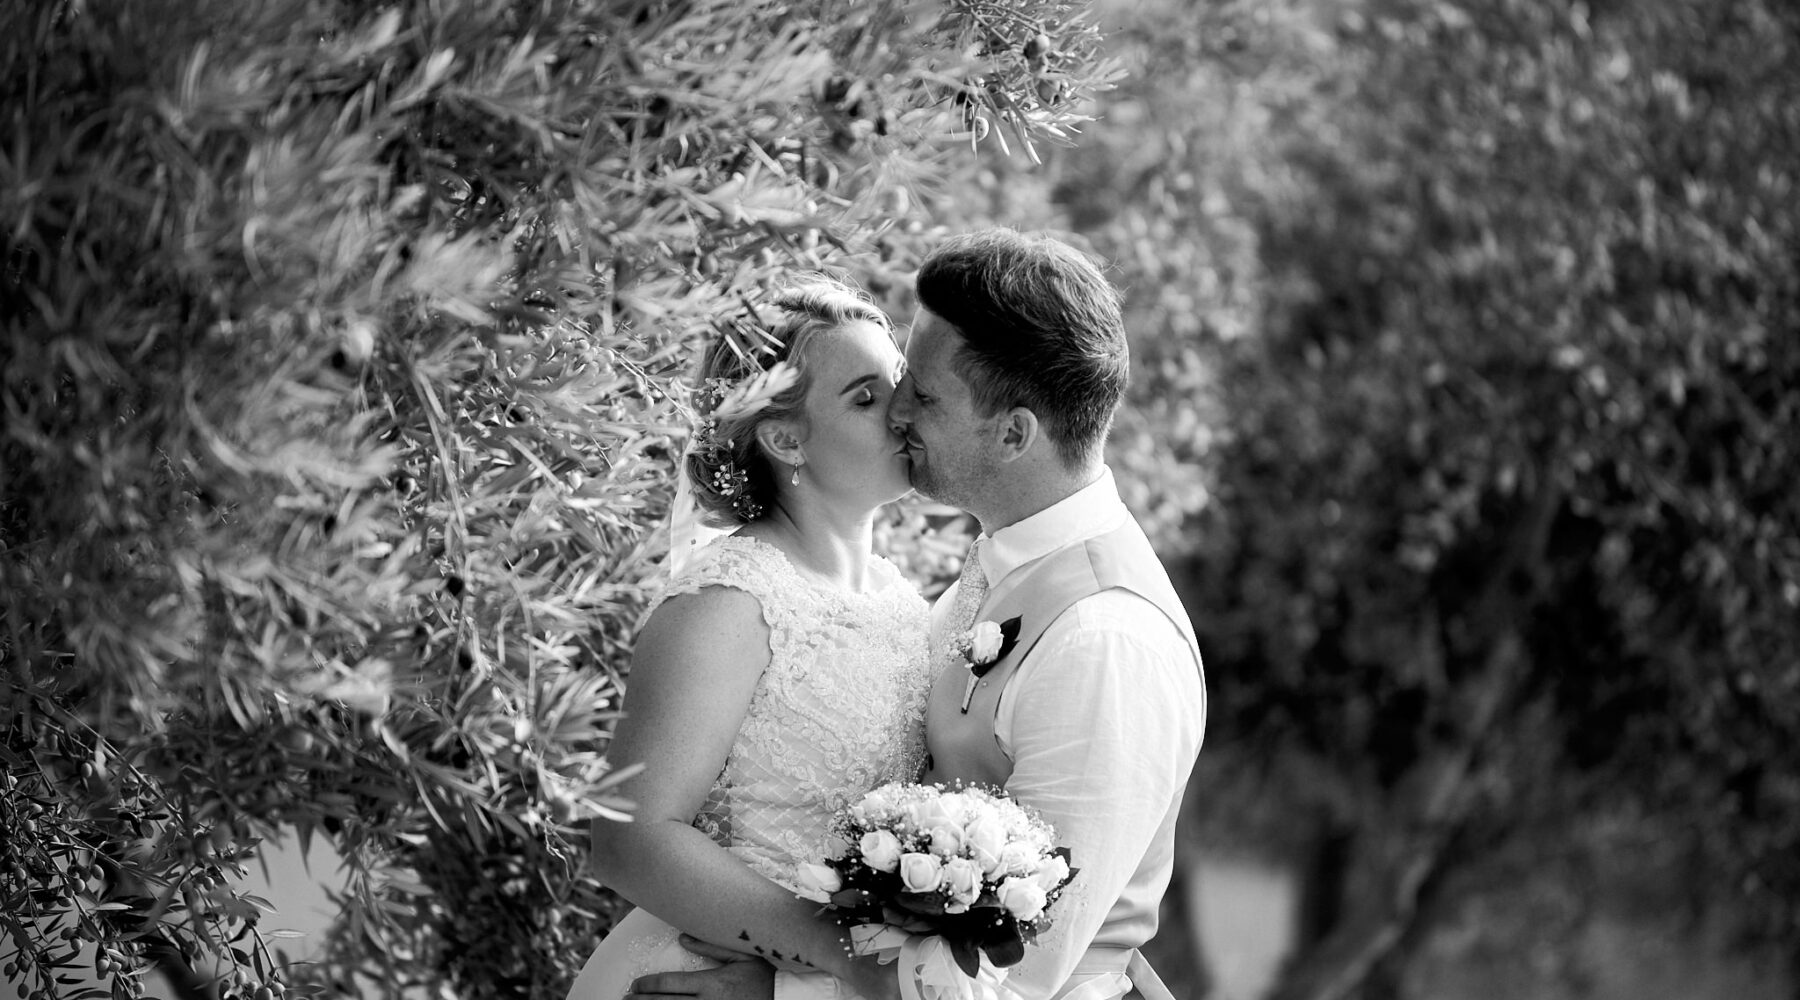 Kacie and Craig // Black and white wedding photography // Atlantica Mare Village Hotel photographer